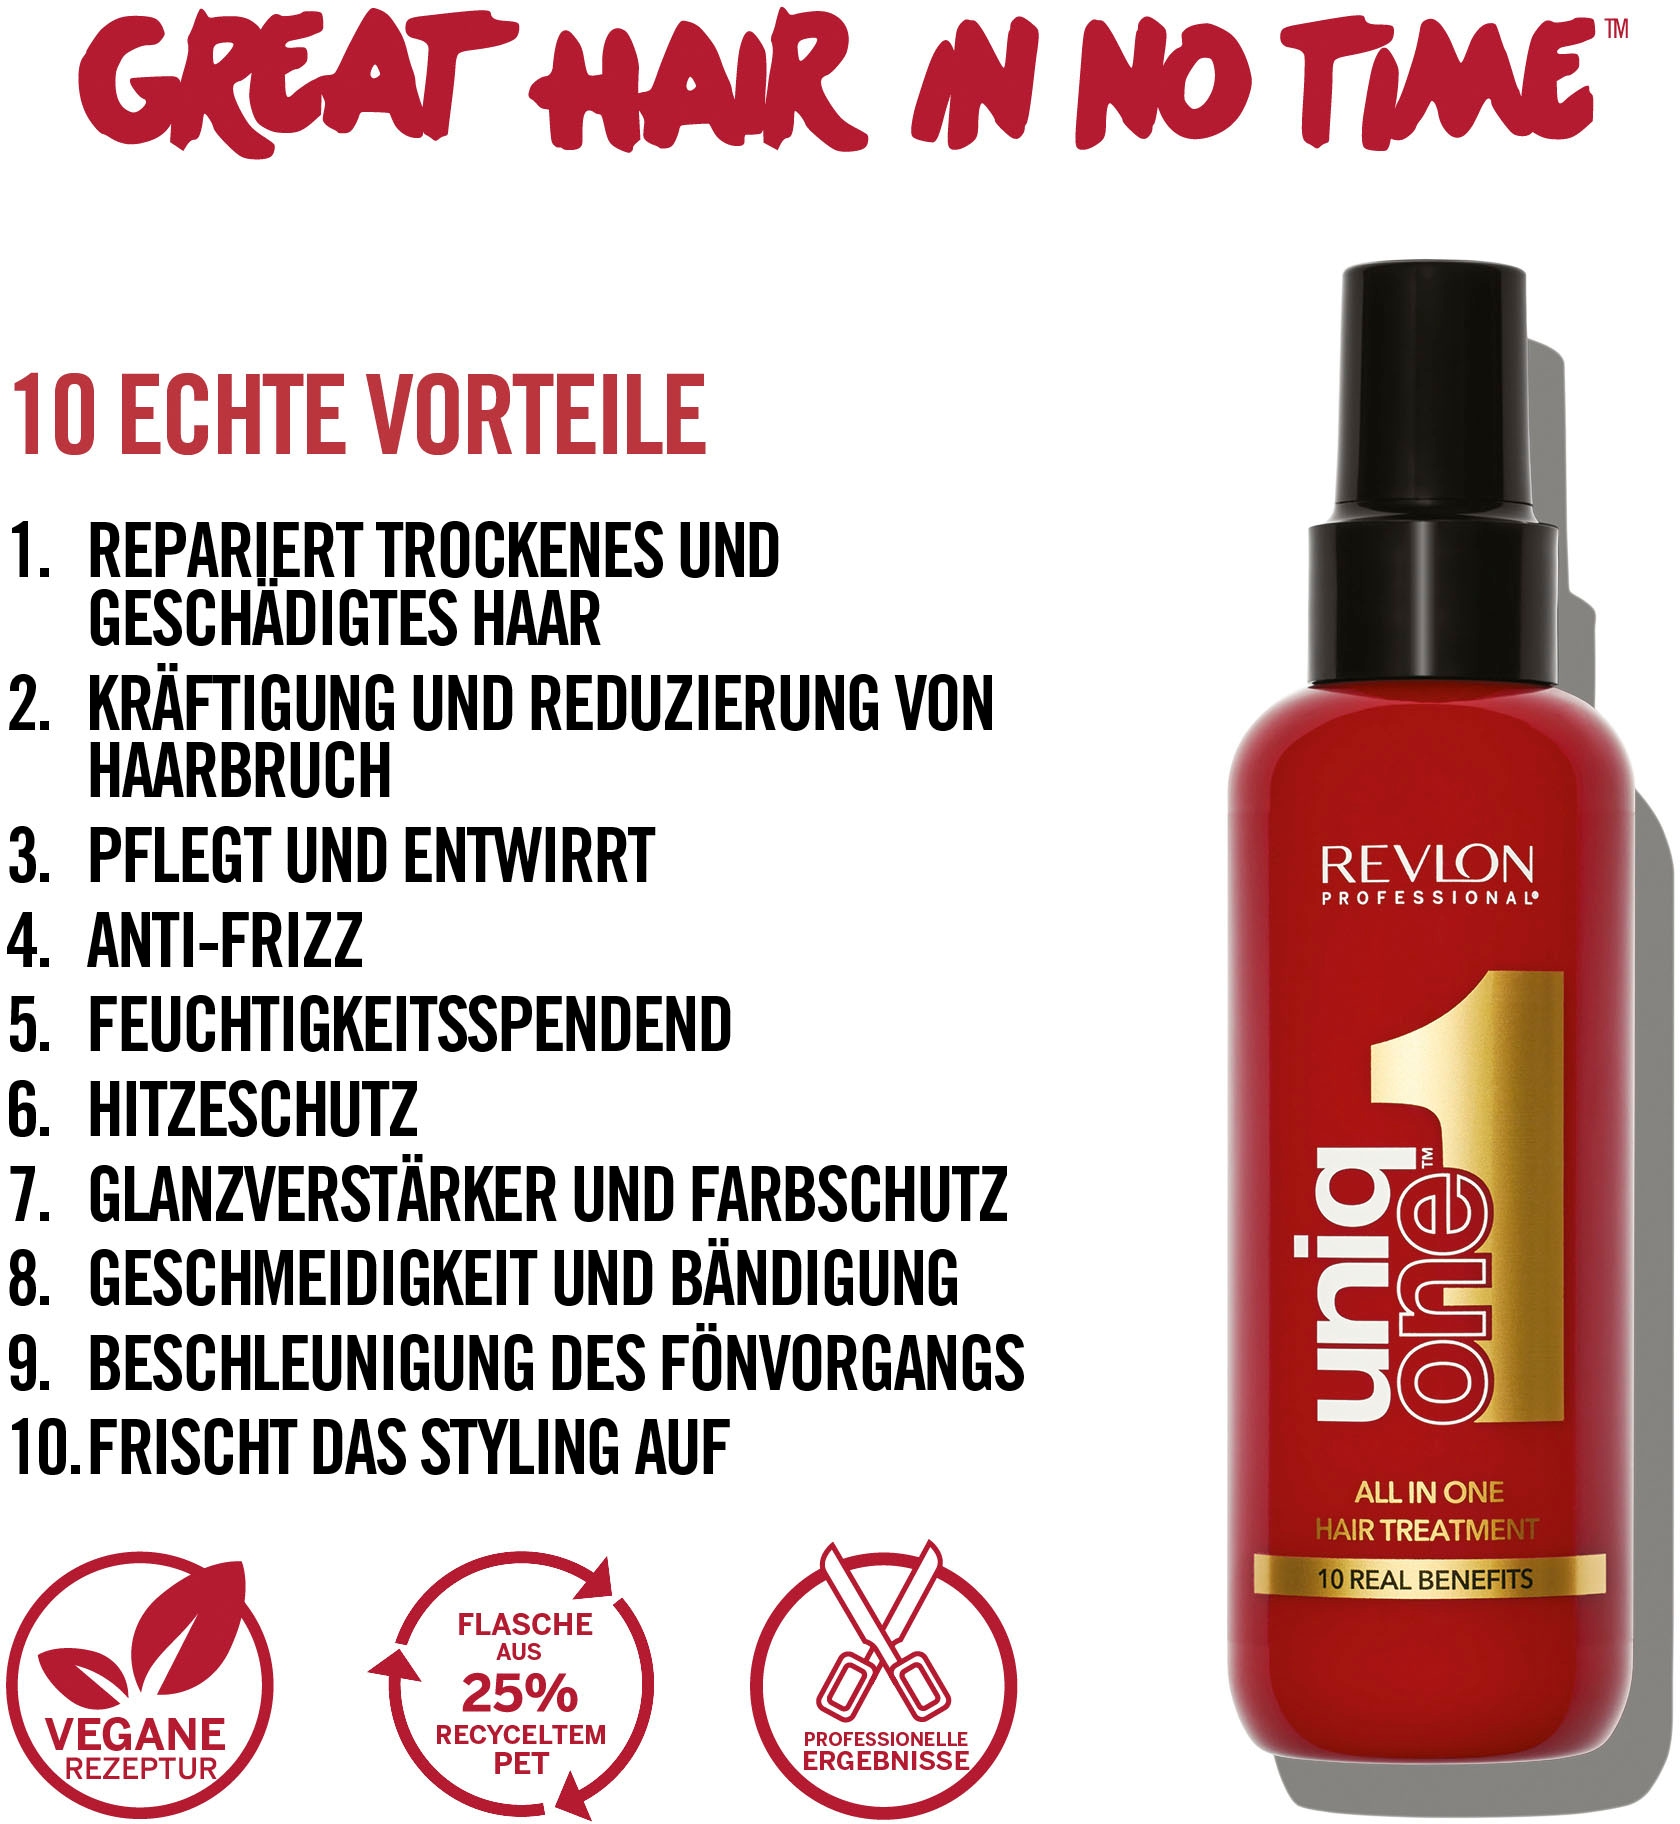 REVLON PROFESSIONAL Haarpflege-Set im All Shop Hair Set Great Online »Uniqone Care One ml« In OTTO 250